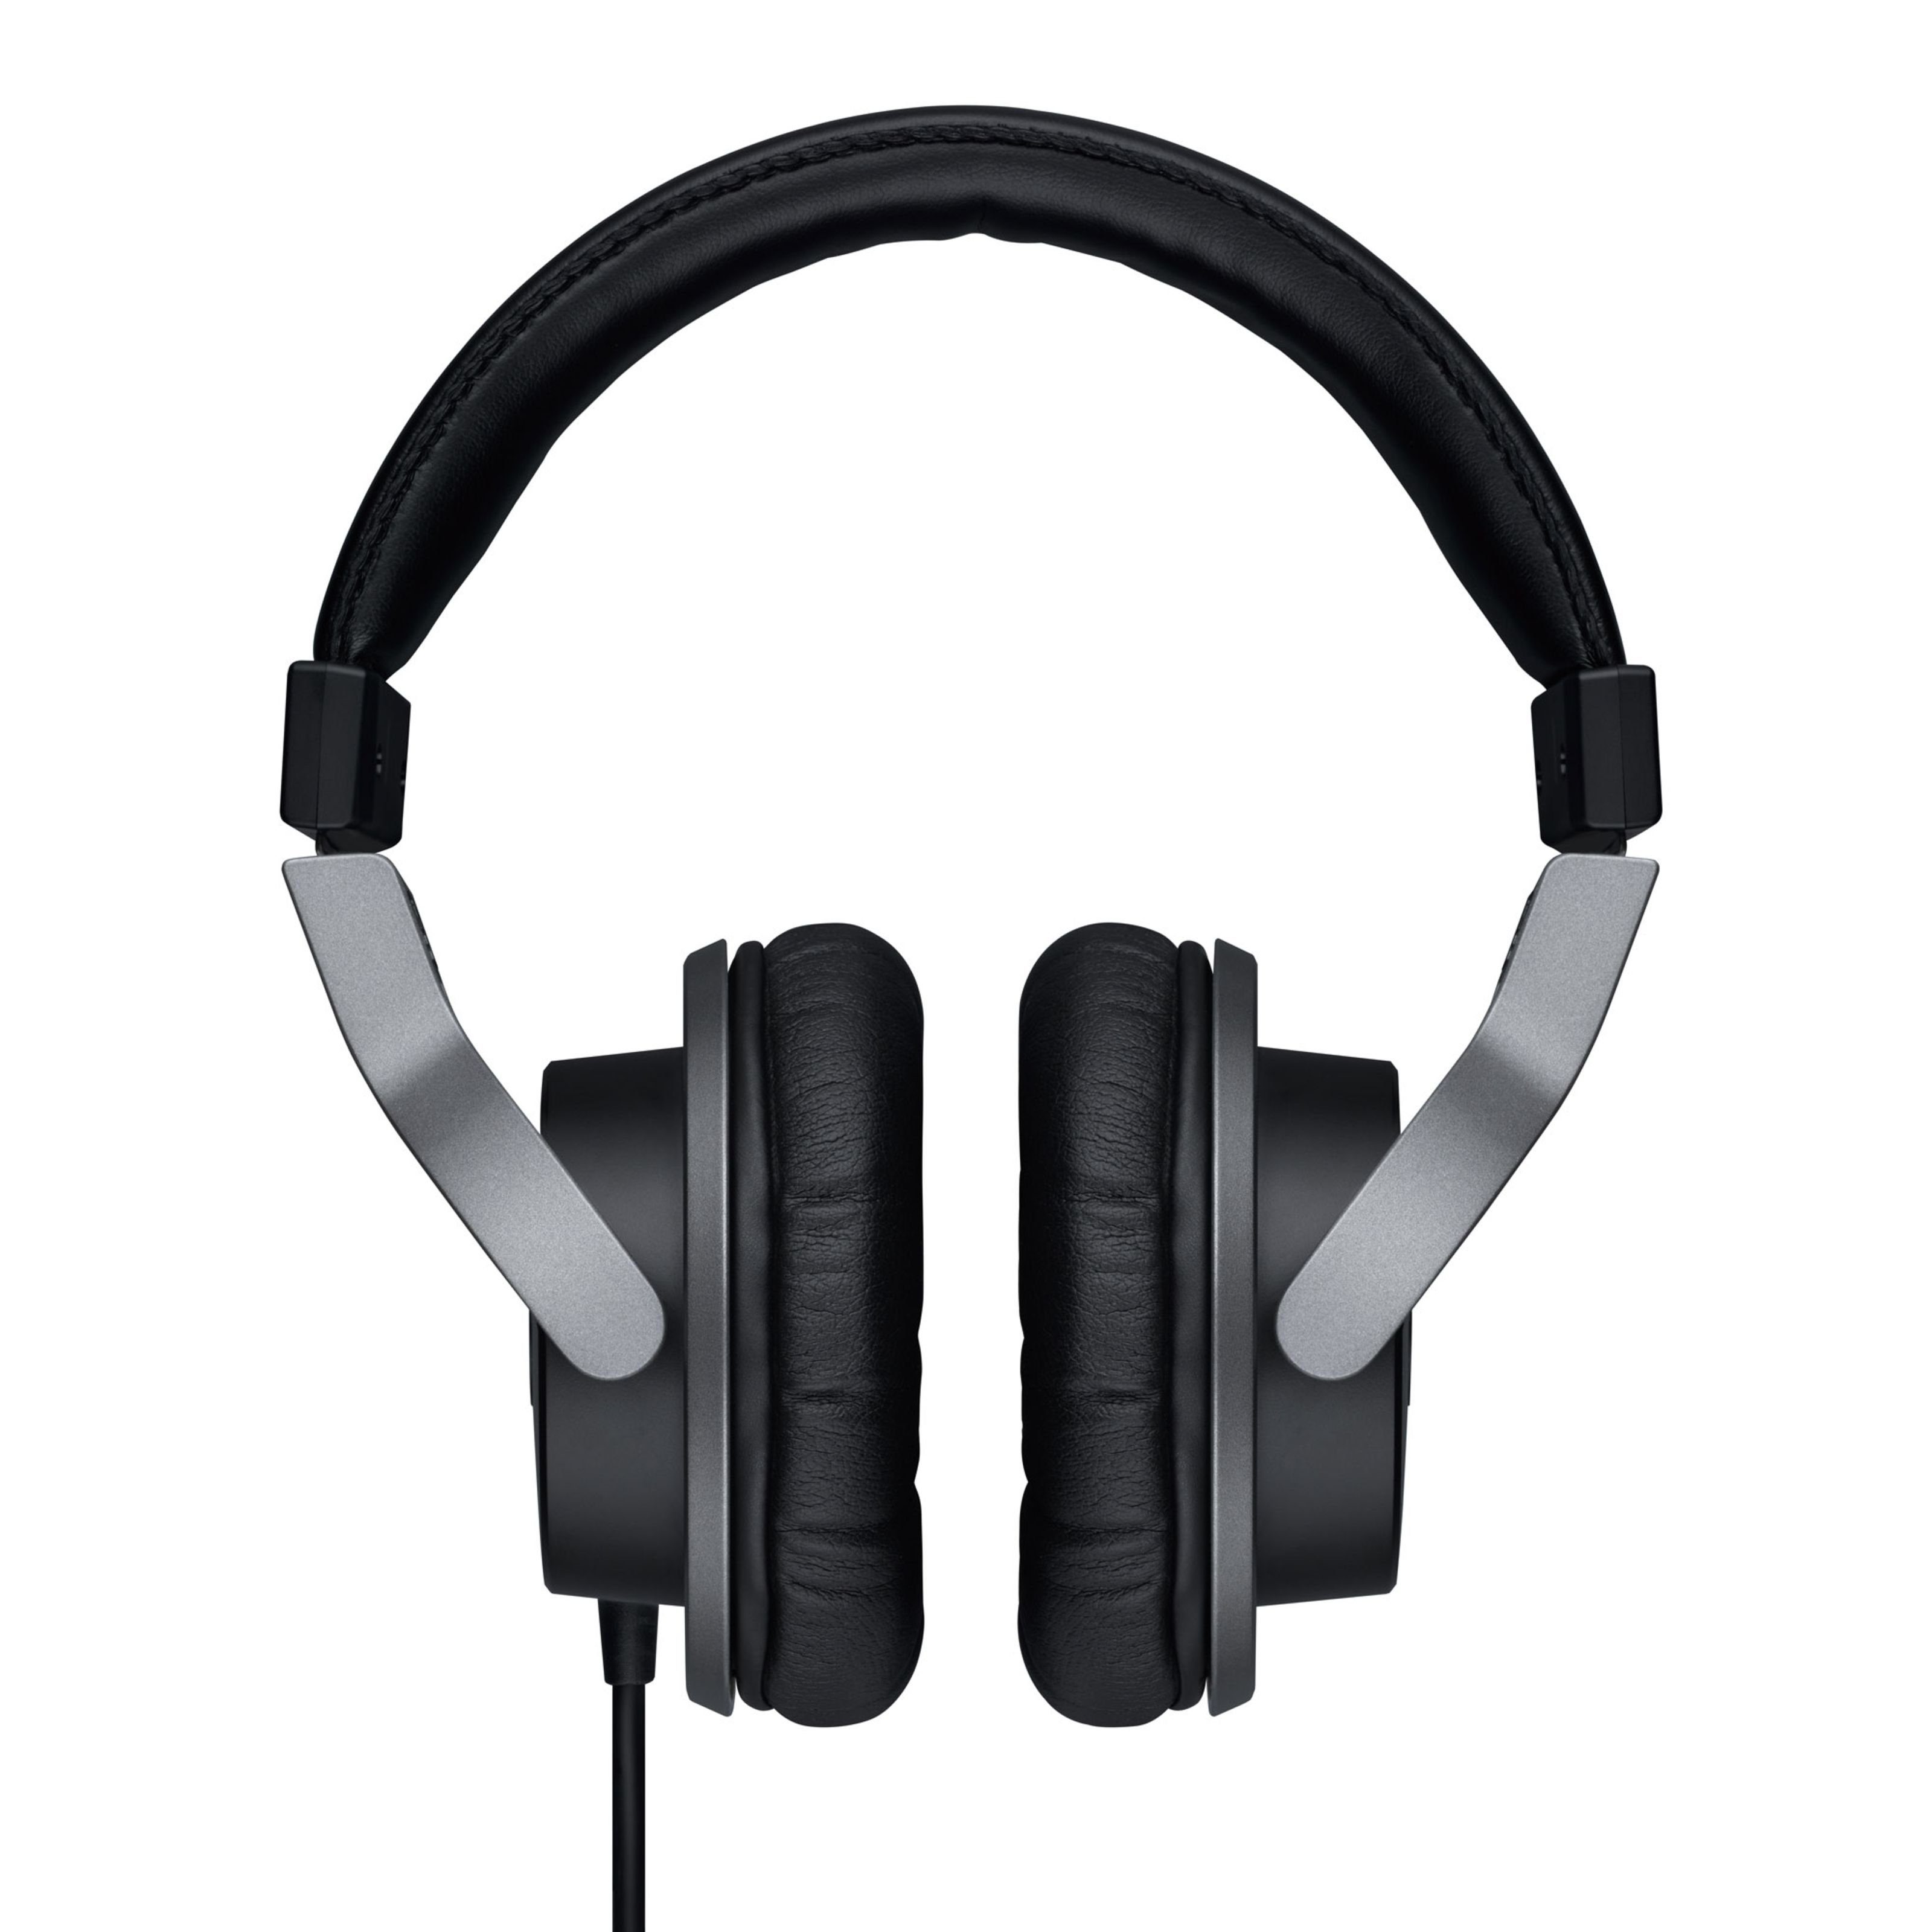 Yamaha Over-Ear-Kopfhörer - Studio Kopfhörer geschlossen) Studiokopfhörer (HPH-MT7 schwarz